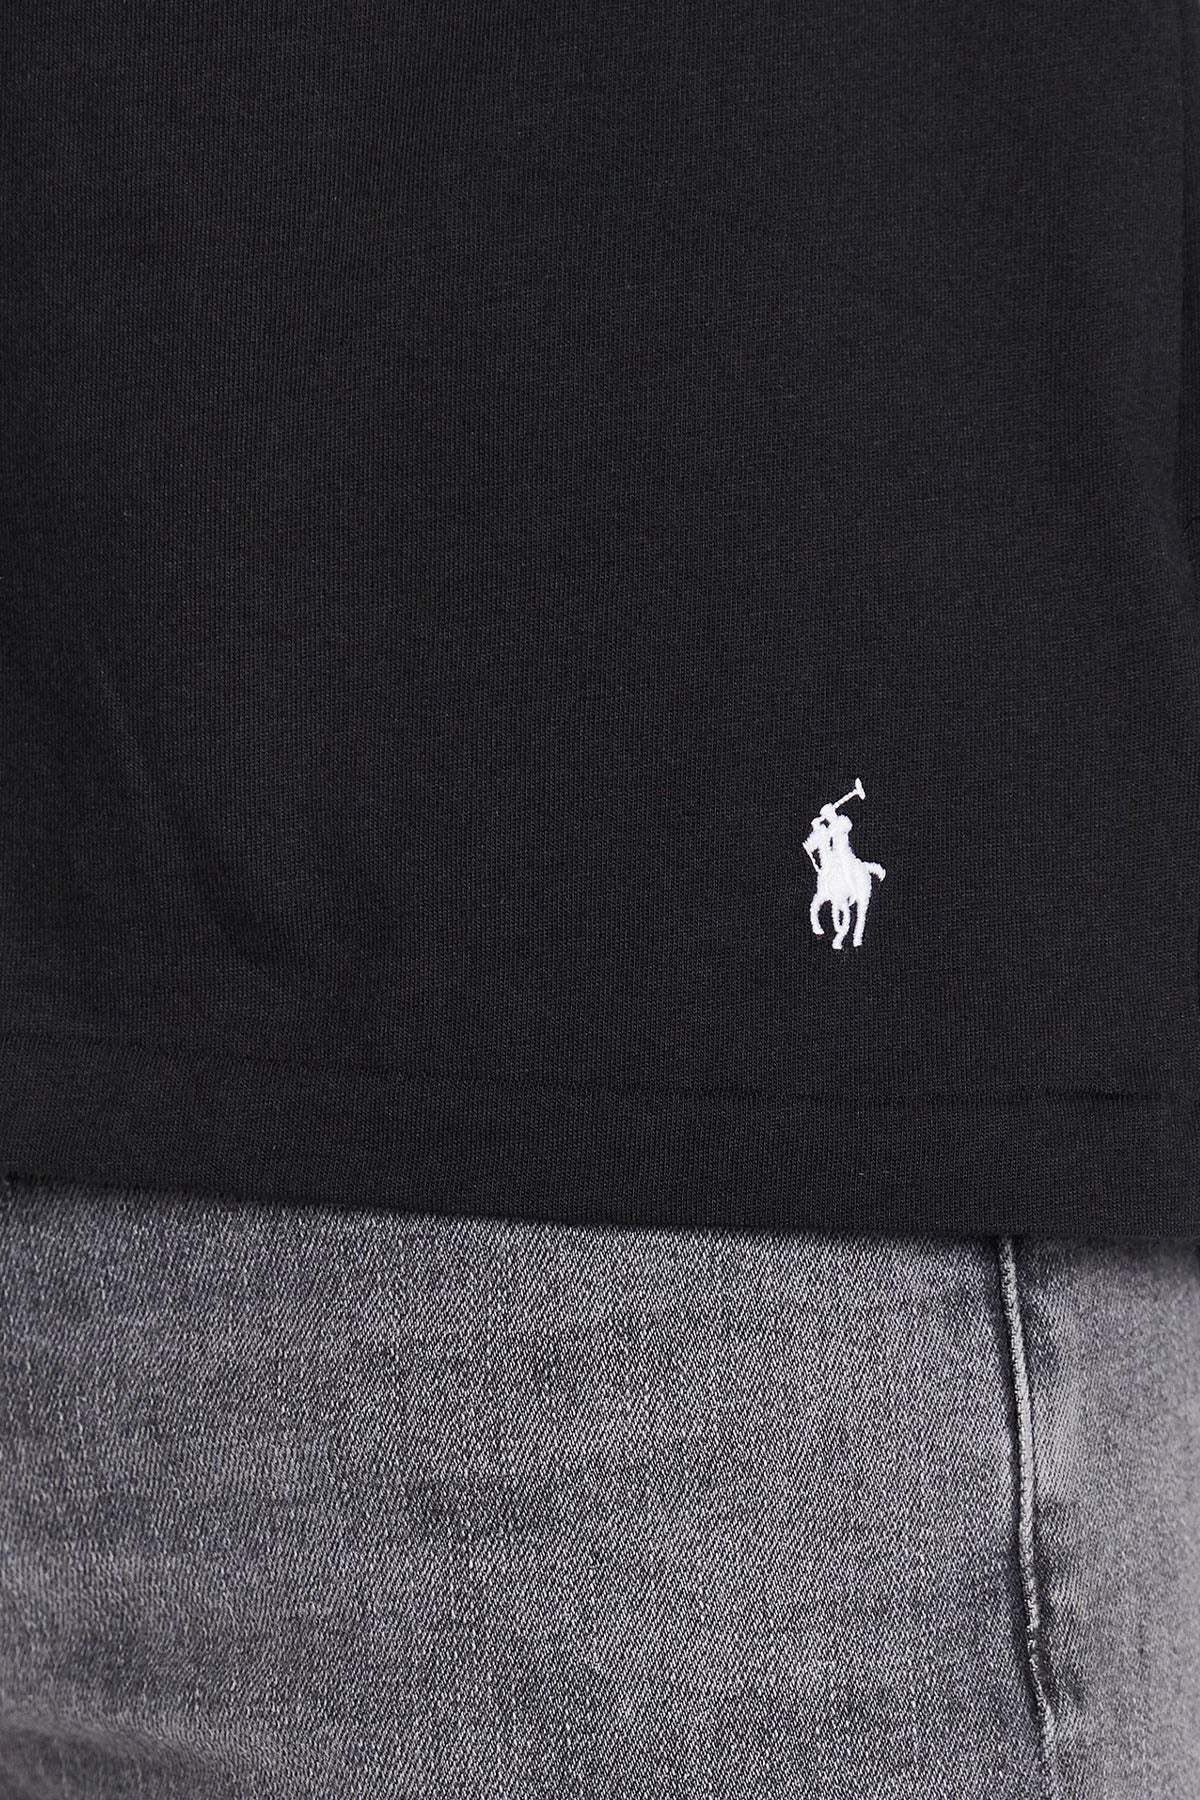 Polo Ralph Lauren Custom Fit Yuvarlak Yaka Logolu T-shirt